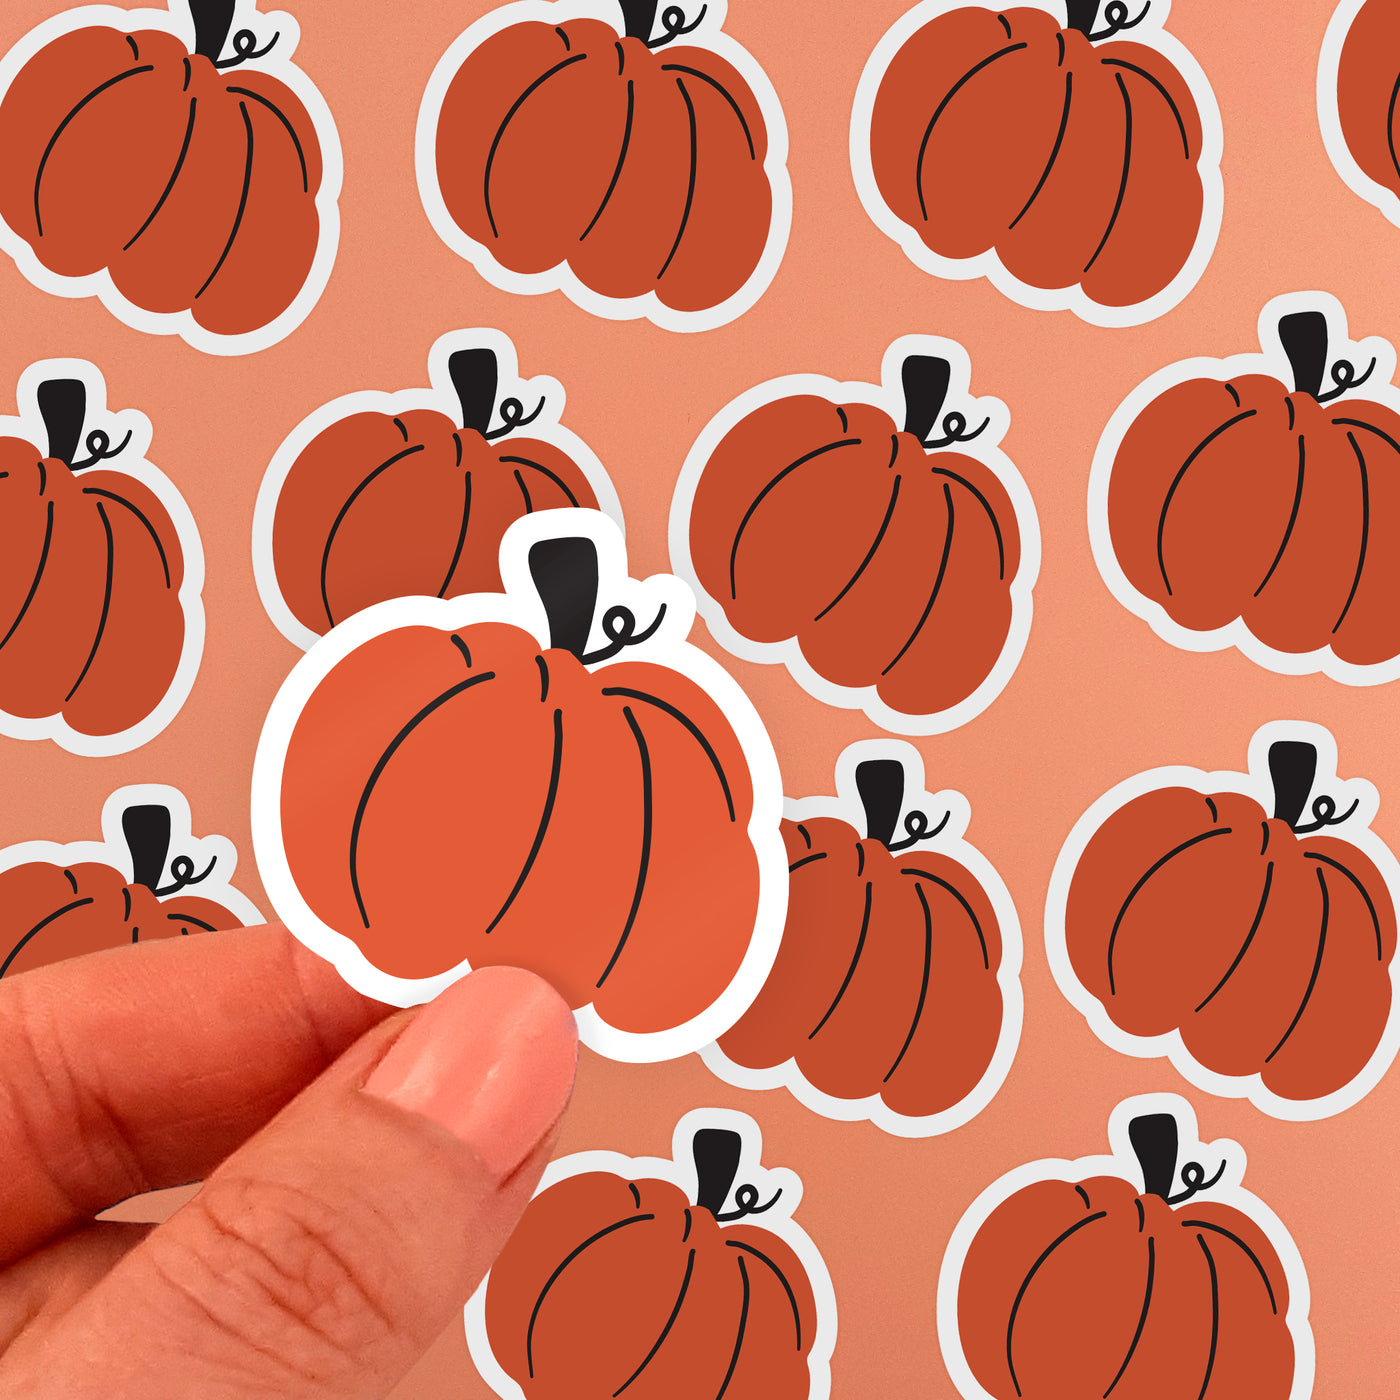 Pumpkin Vinyl Sticker